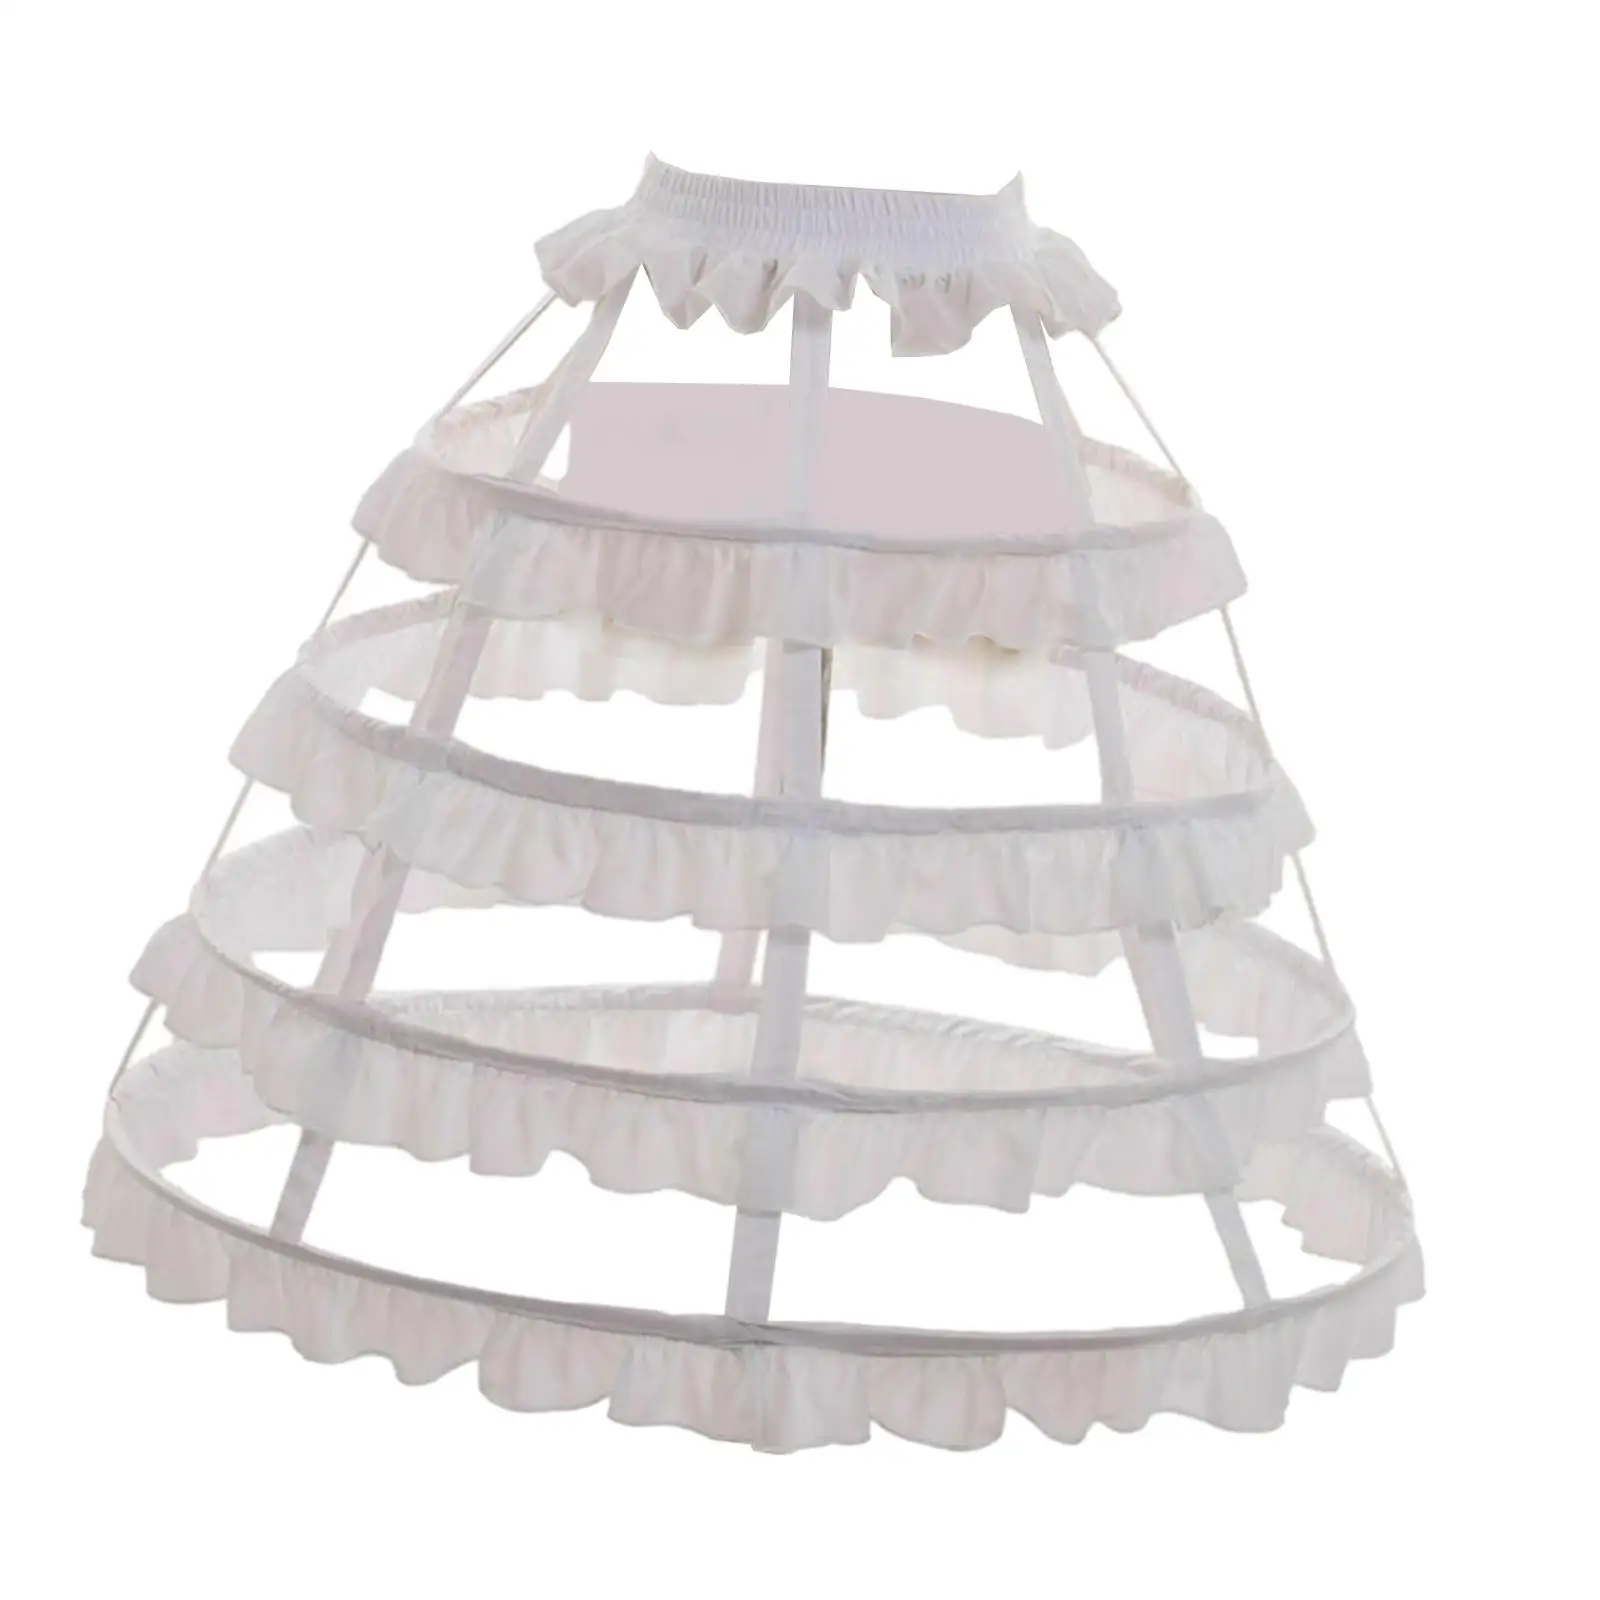 Hoop Skirt Petticoat Crinoline Underskirt Pannier Women Hoops Pannier Petticoat Cage Pannier for Cosplay Prom Dress Gown Wedding